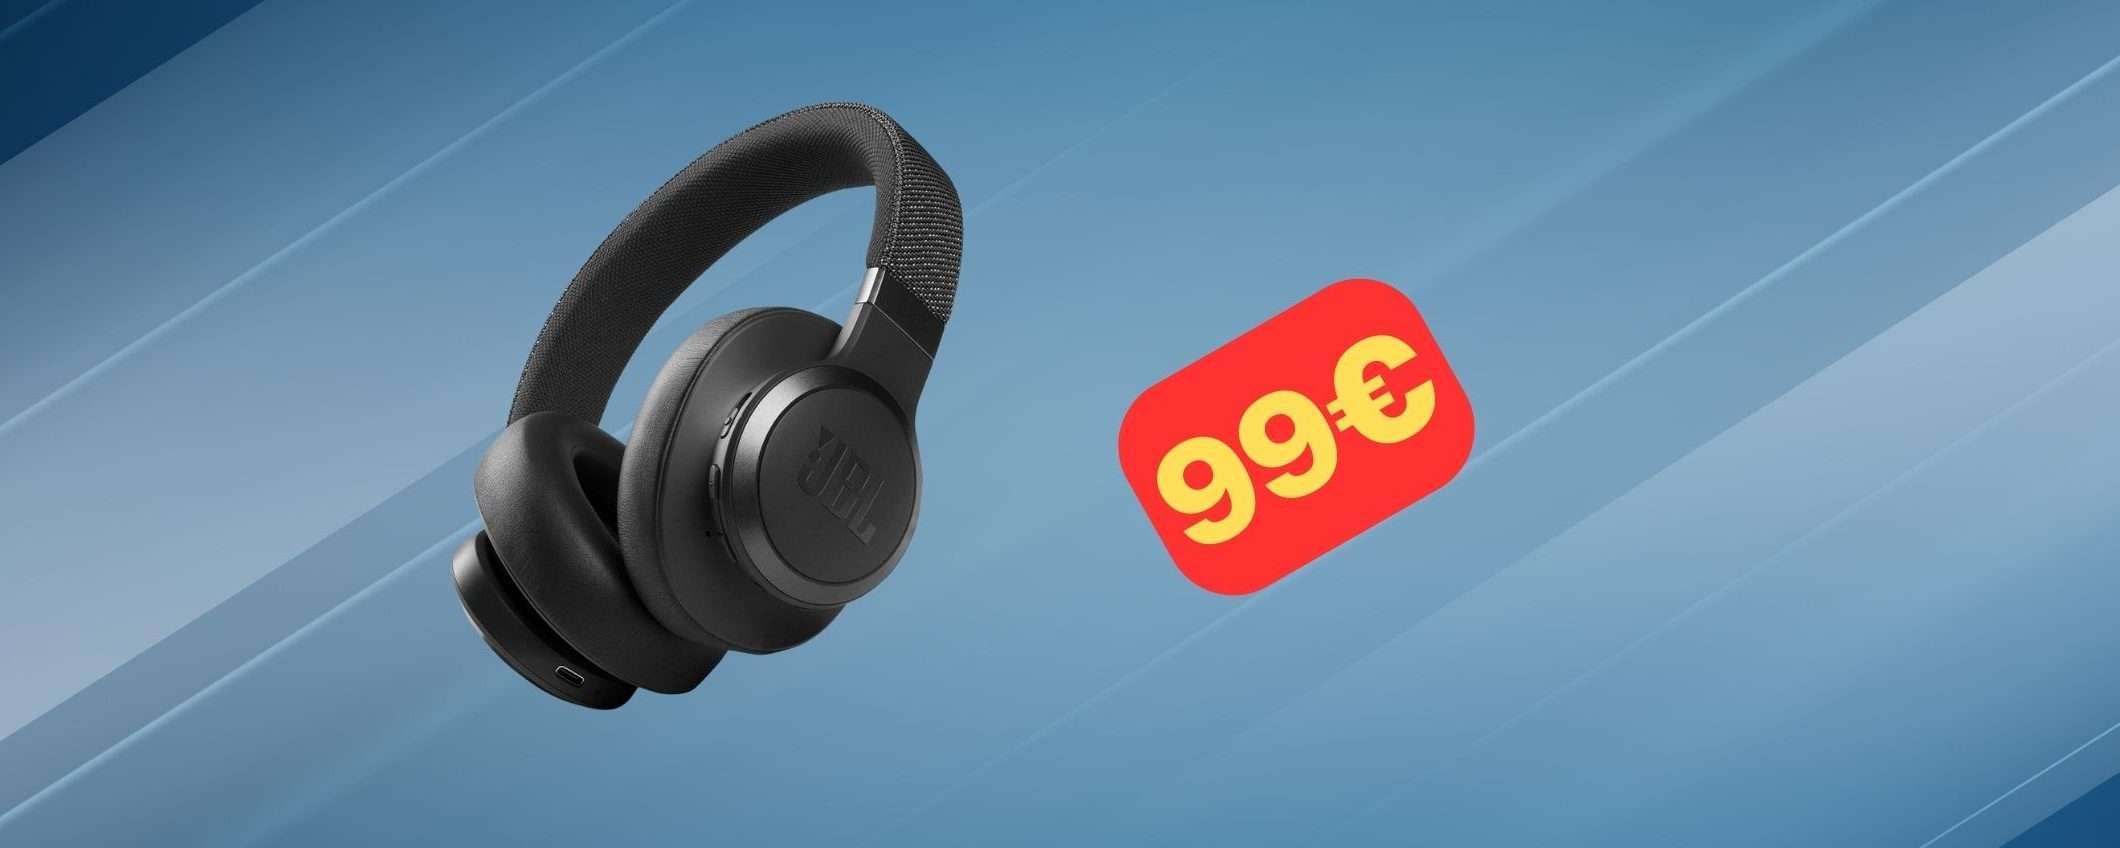 Cuffie JBL Wireless a 99 euro su : SUPER SCONTO (-32%)